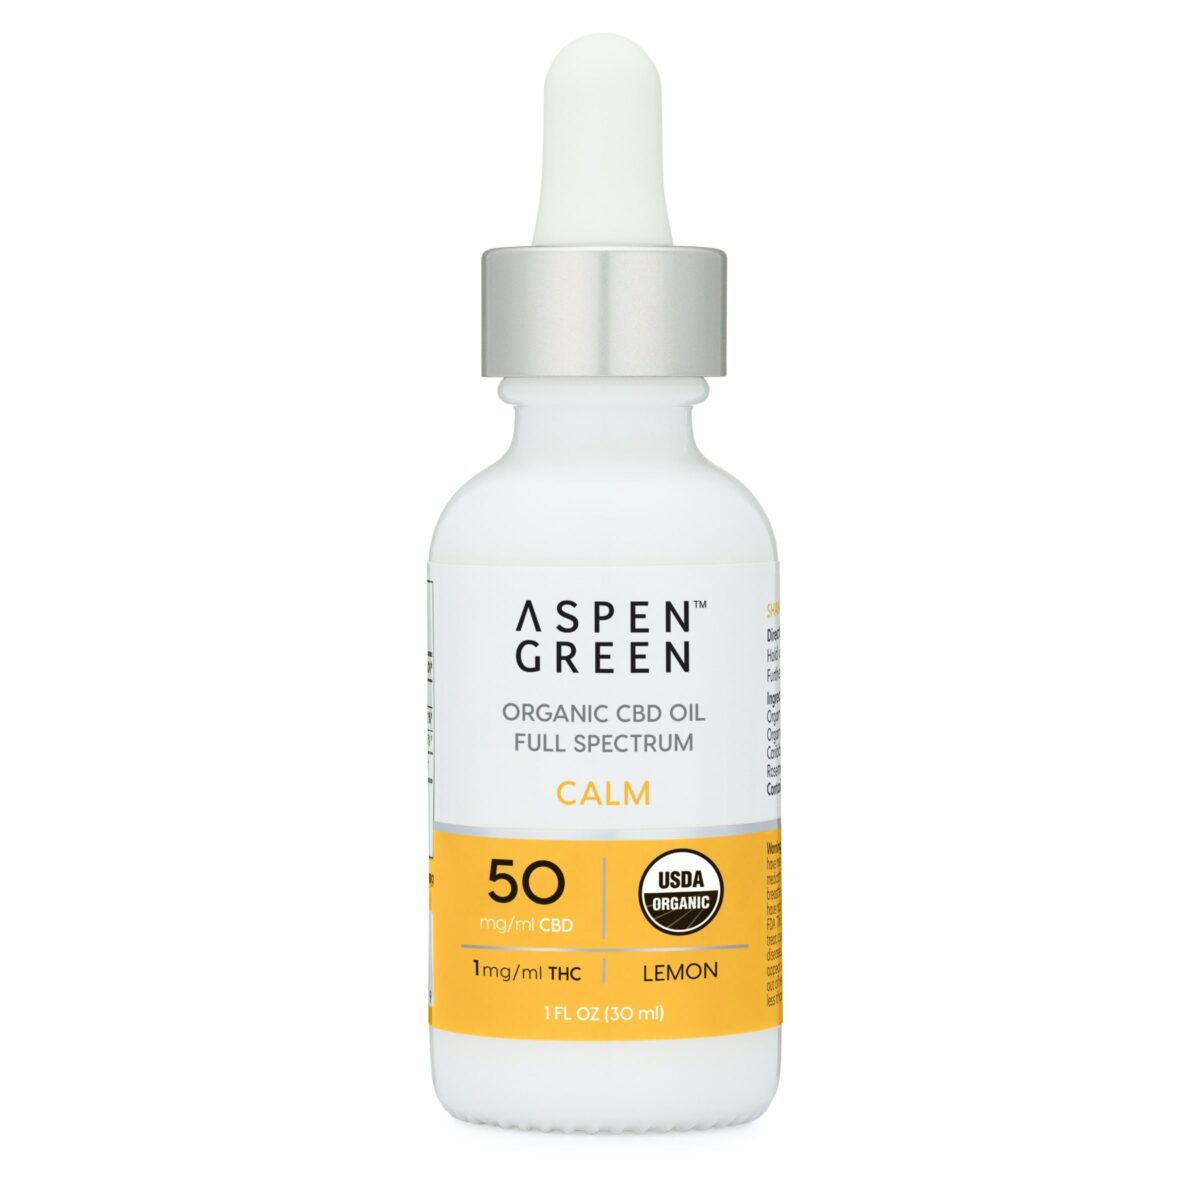 Aspen Green USDA Certified Organic CBD Oil Tincture, Calm (50mg/ml CBD), Lemon Flavor